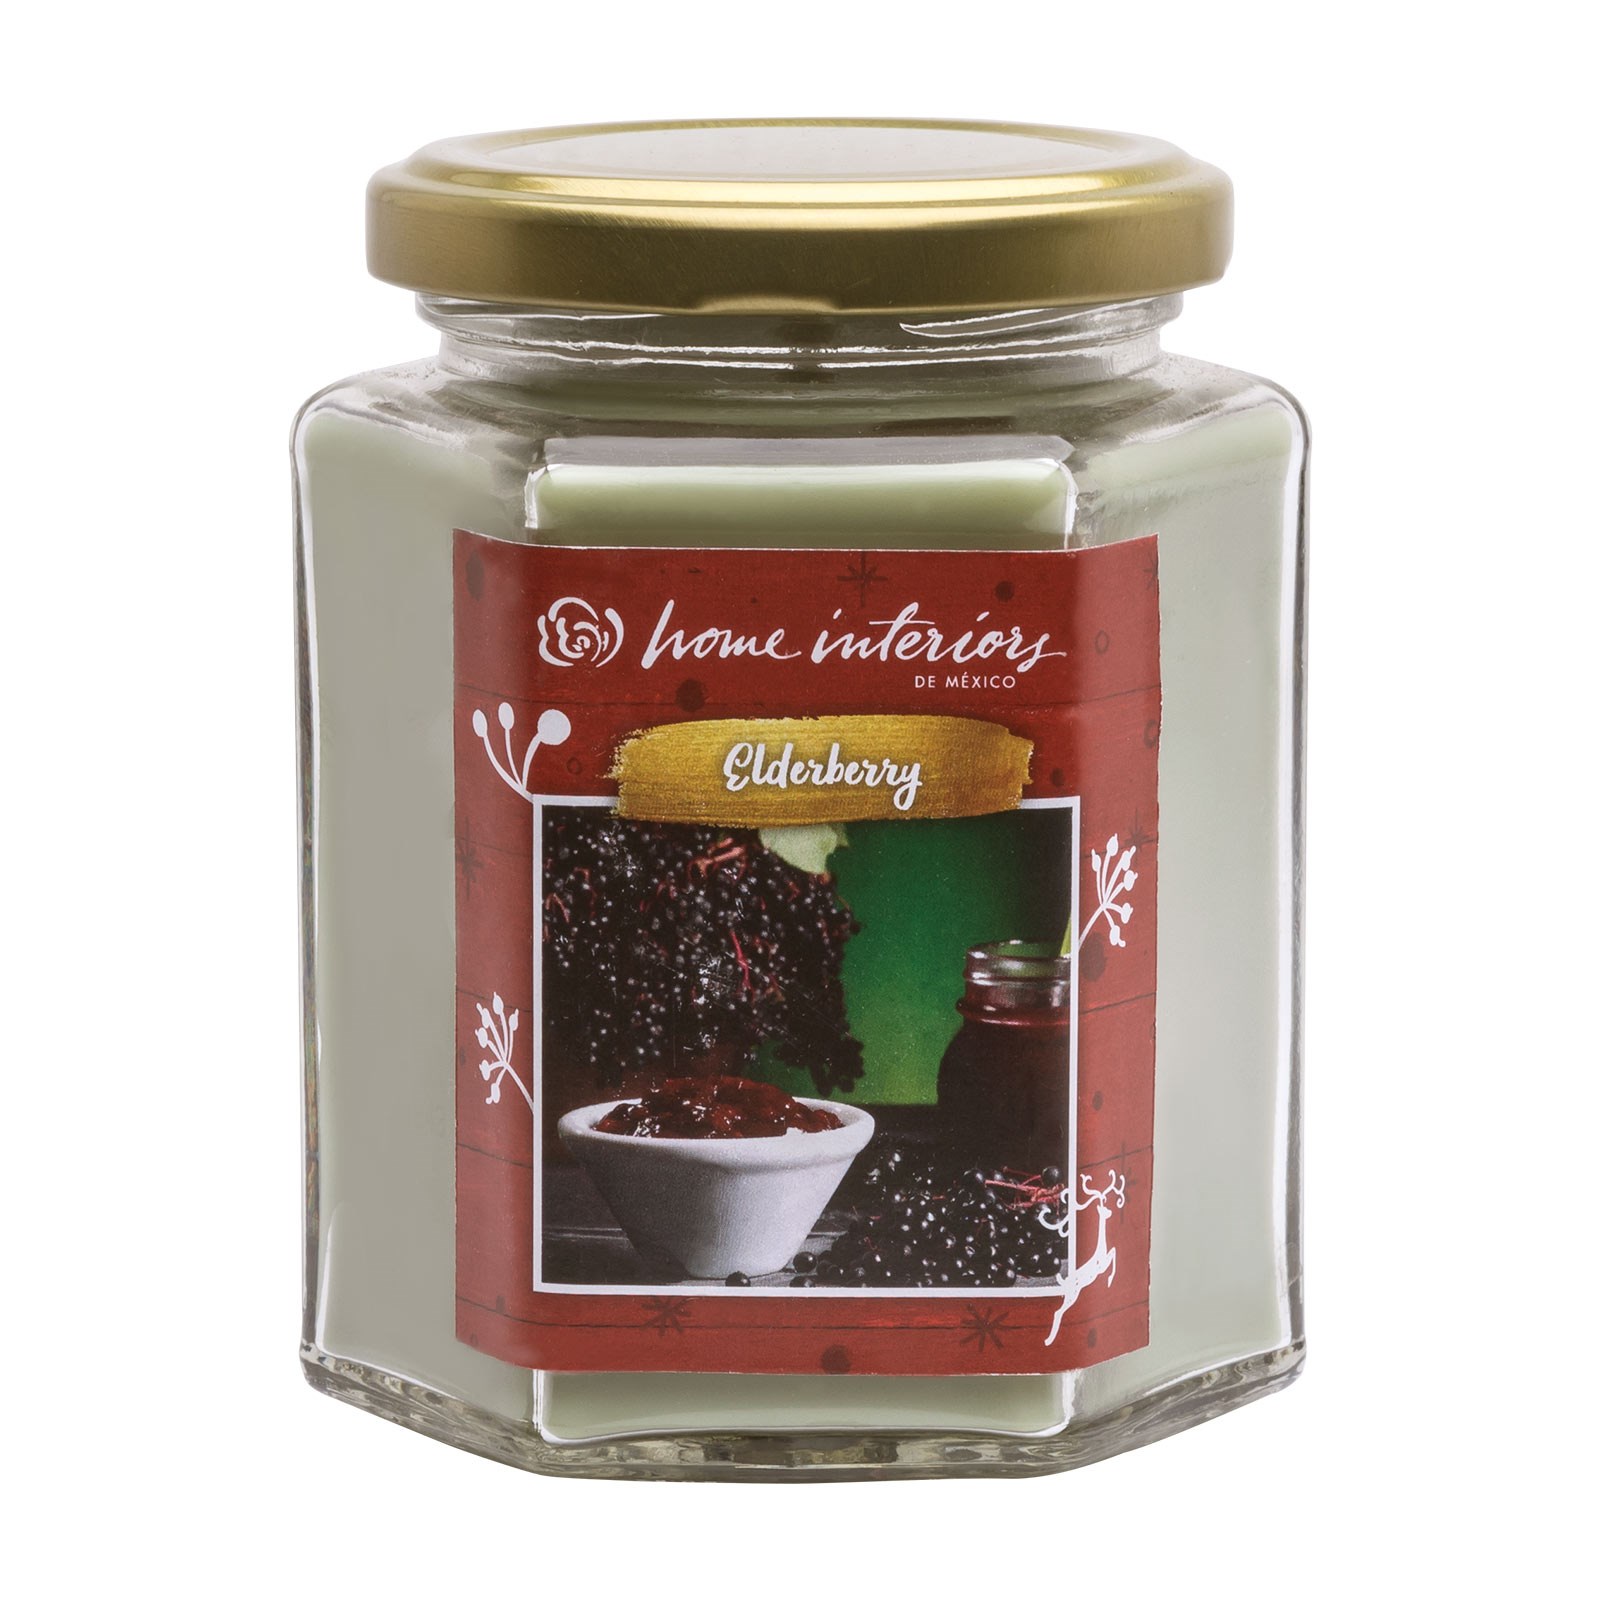 31480 Glass Jar Candle Fragrance Elderberry Home Interiors